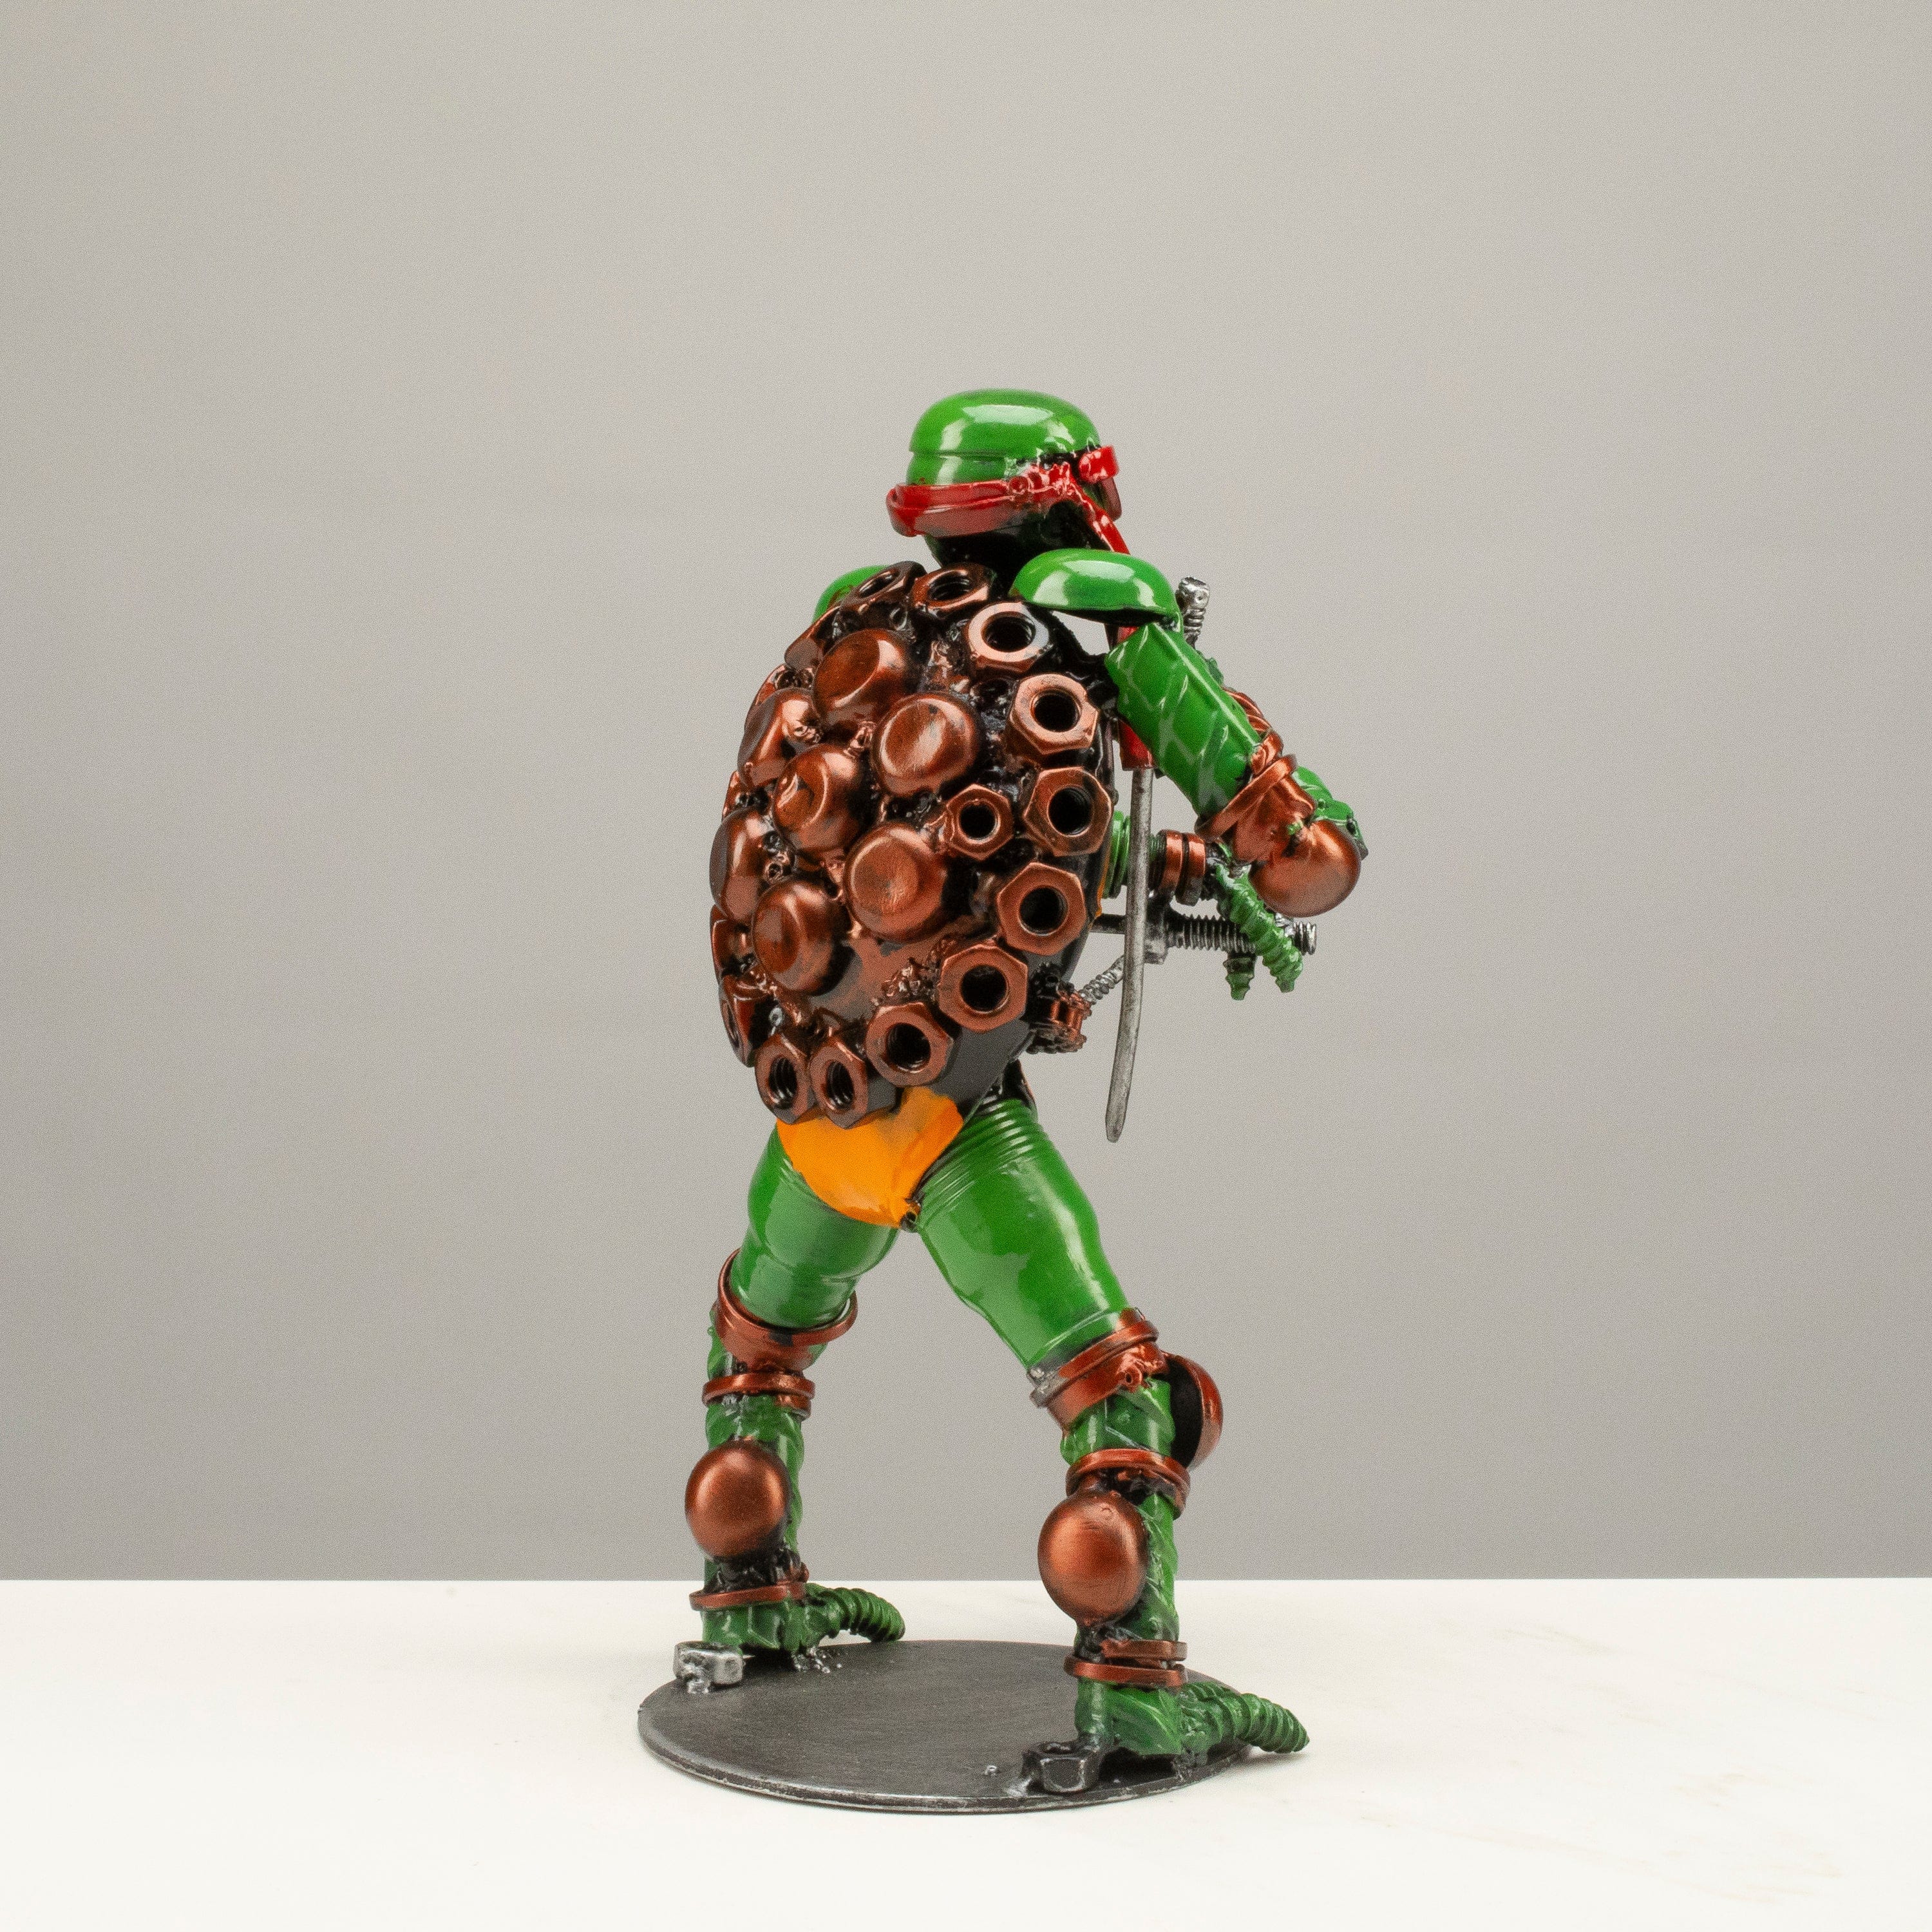 Kalifano Recycled Metal Art 9.5" Raphael Ninja Turtle Inspired Recycled Metal Sculpture RMS-600NTR-N